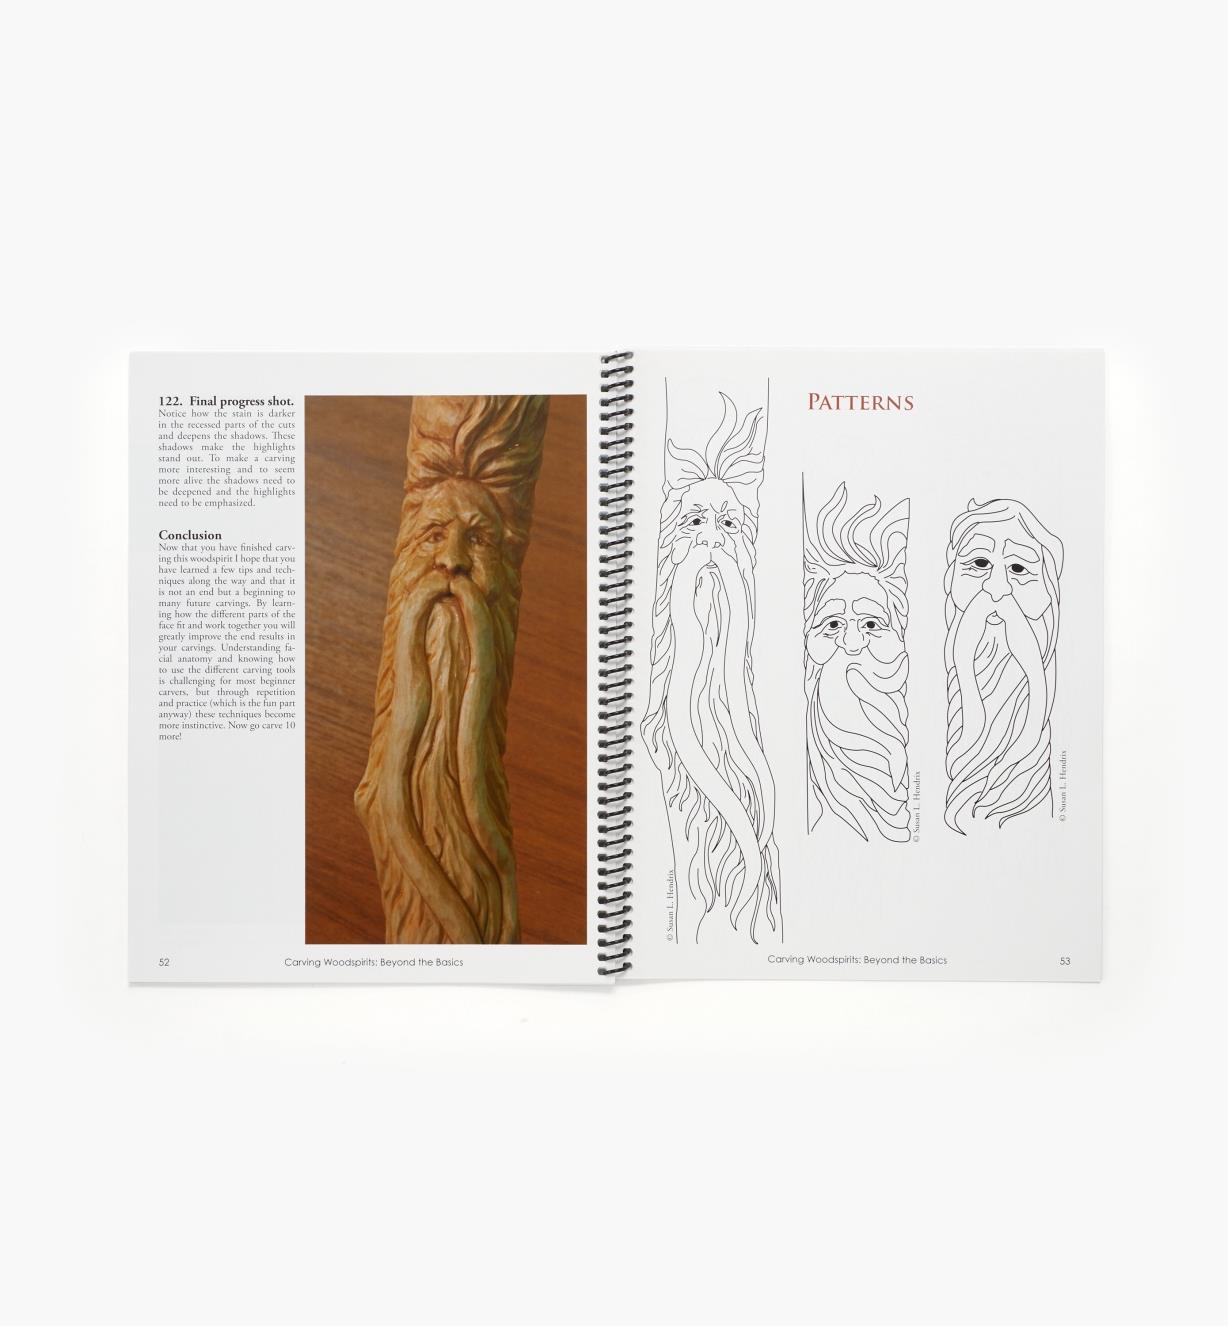 45L0157 - Carving Woodspirits – Beyond the Basics